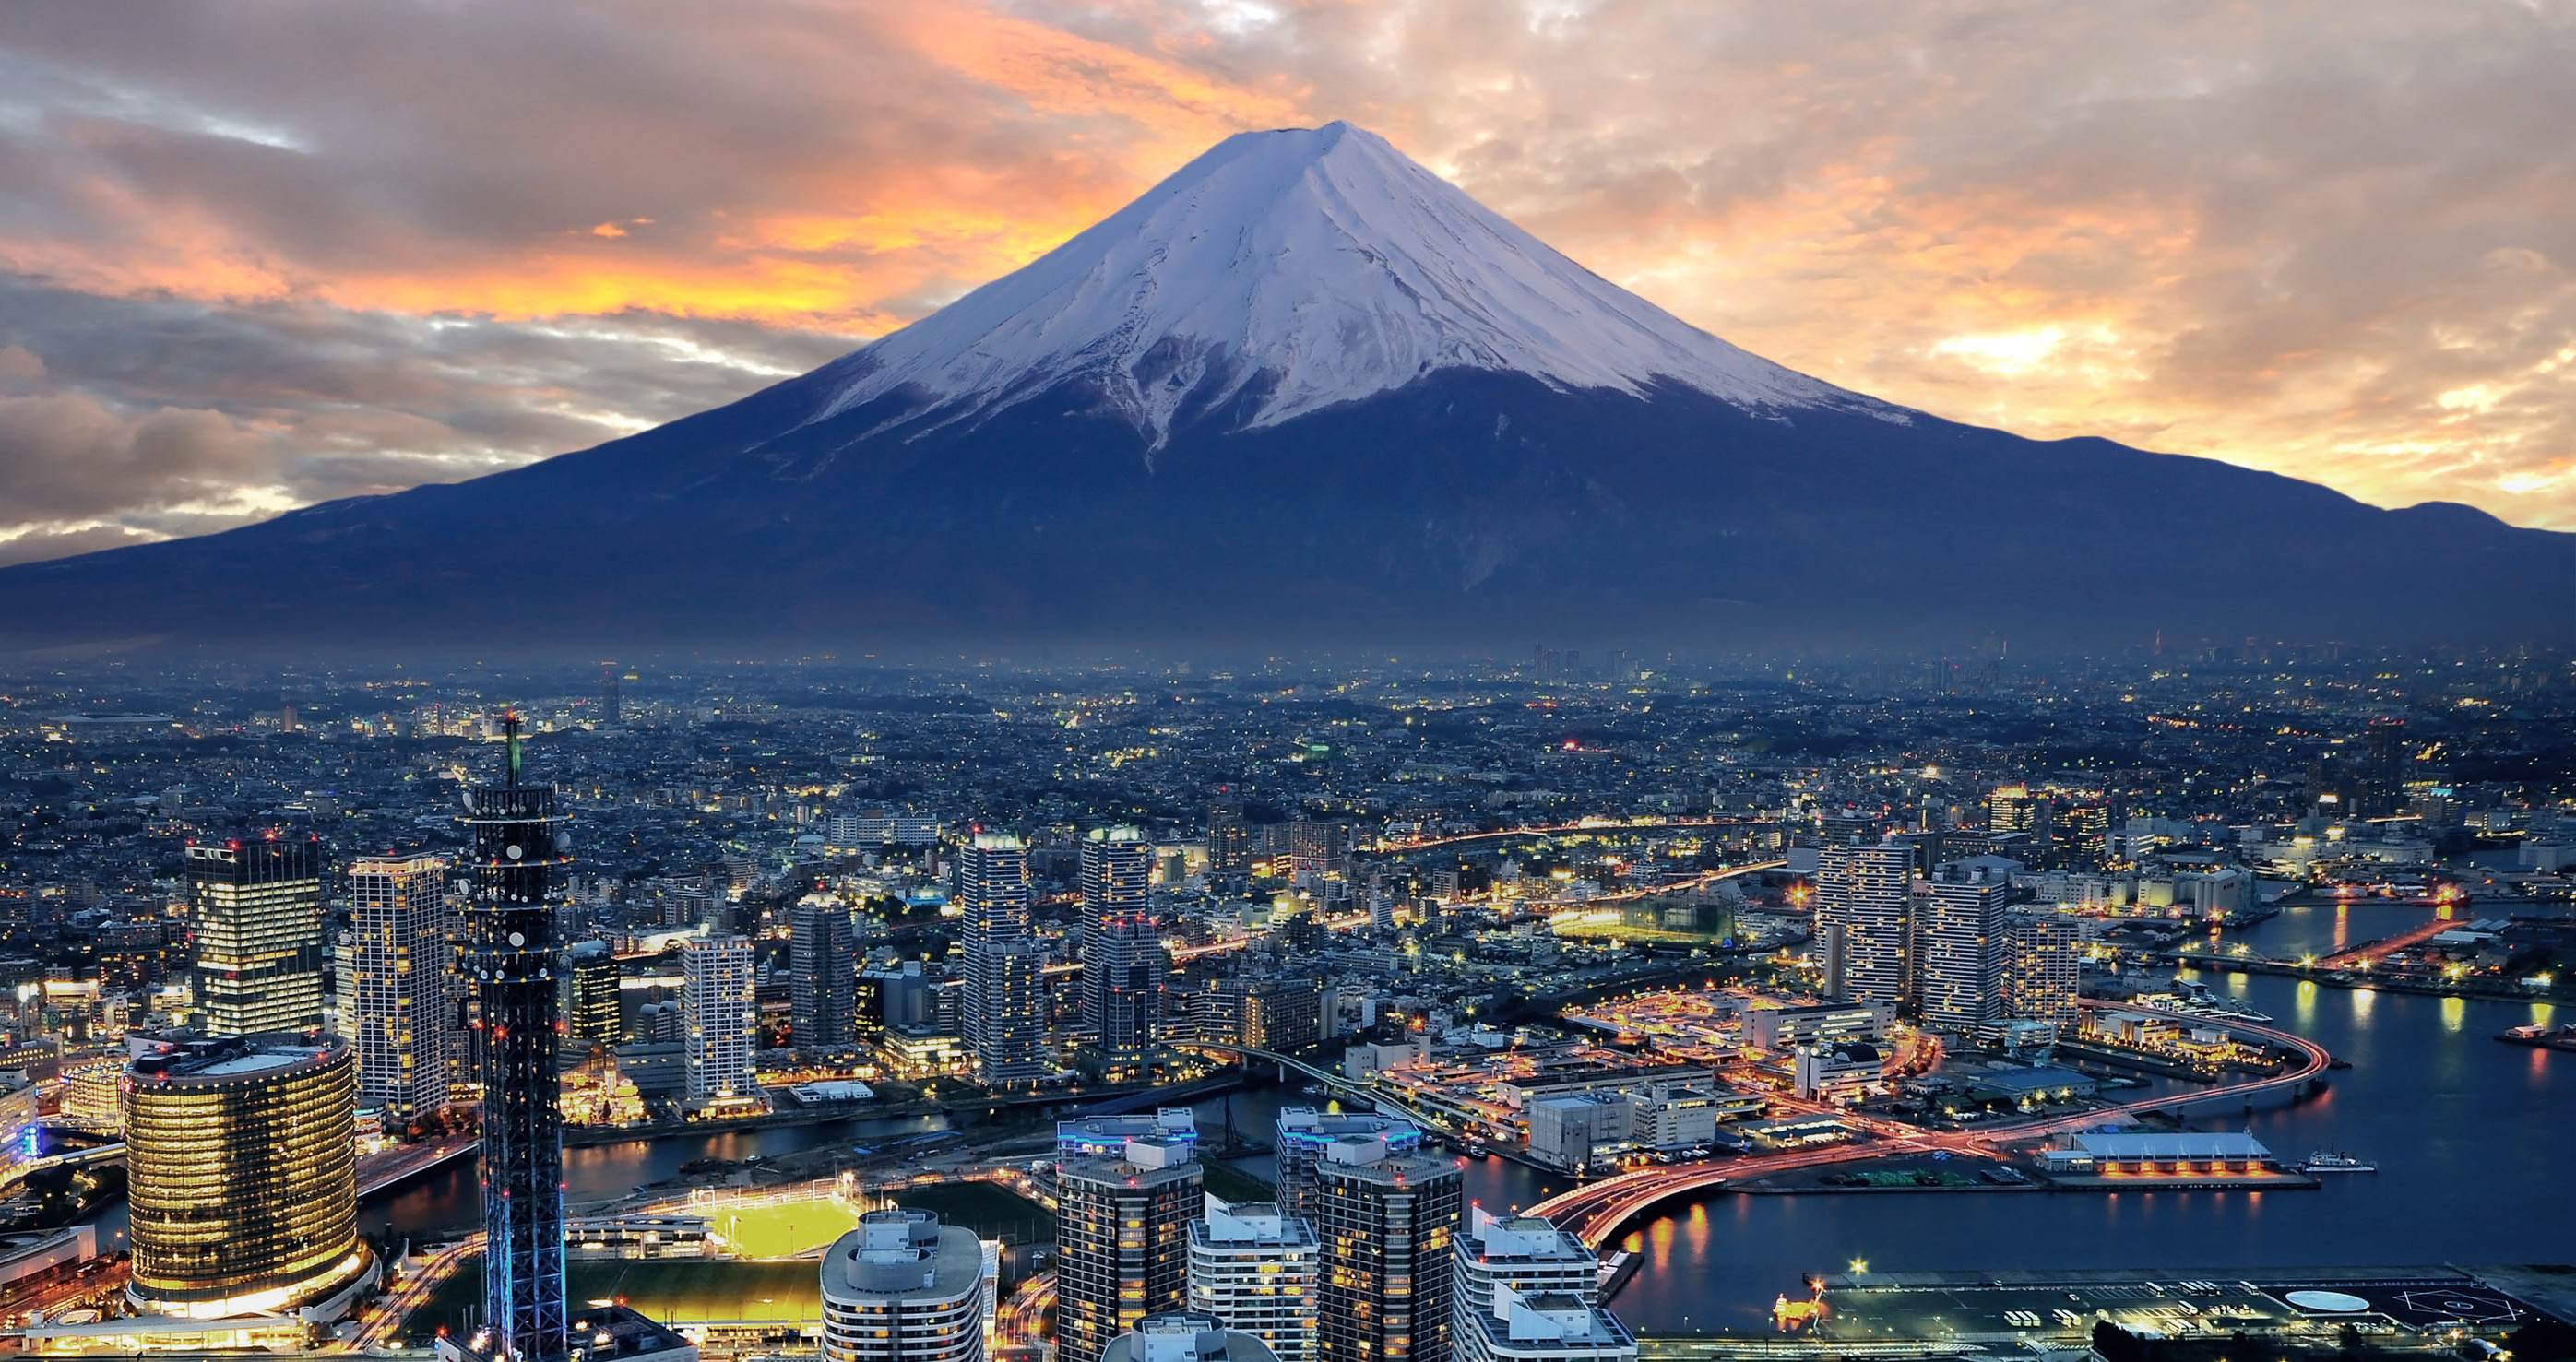 Mount Fuji Japan's loftiest and holiest peak | Washingtonian Post